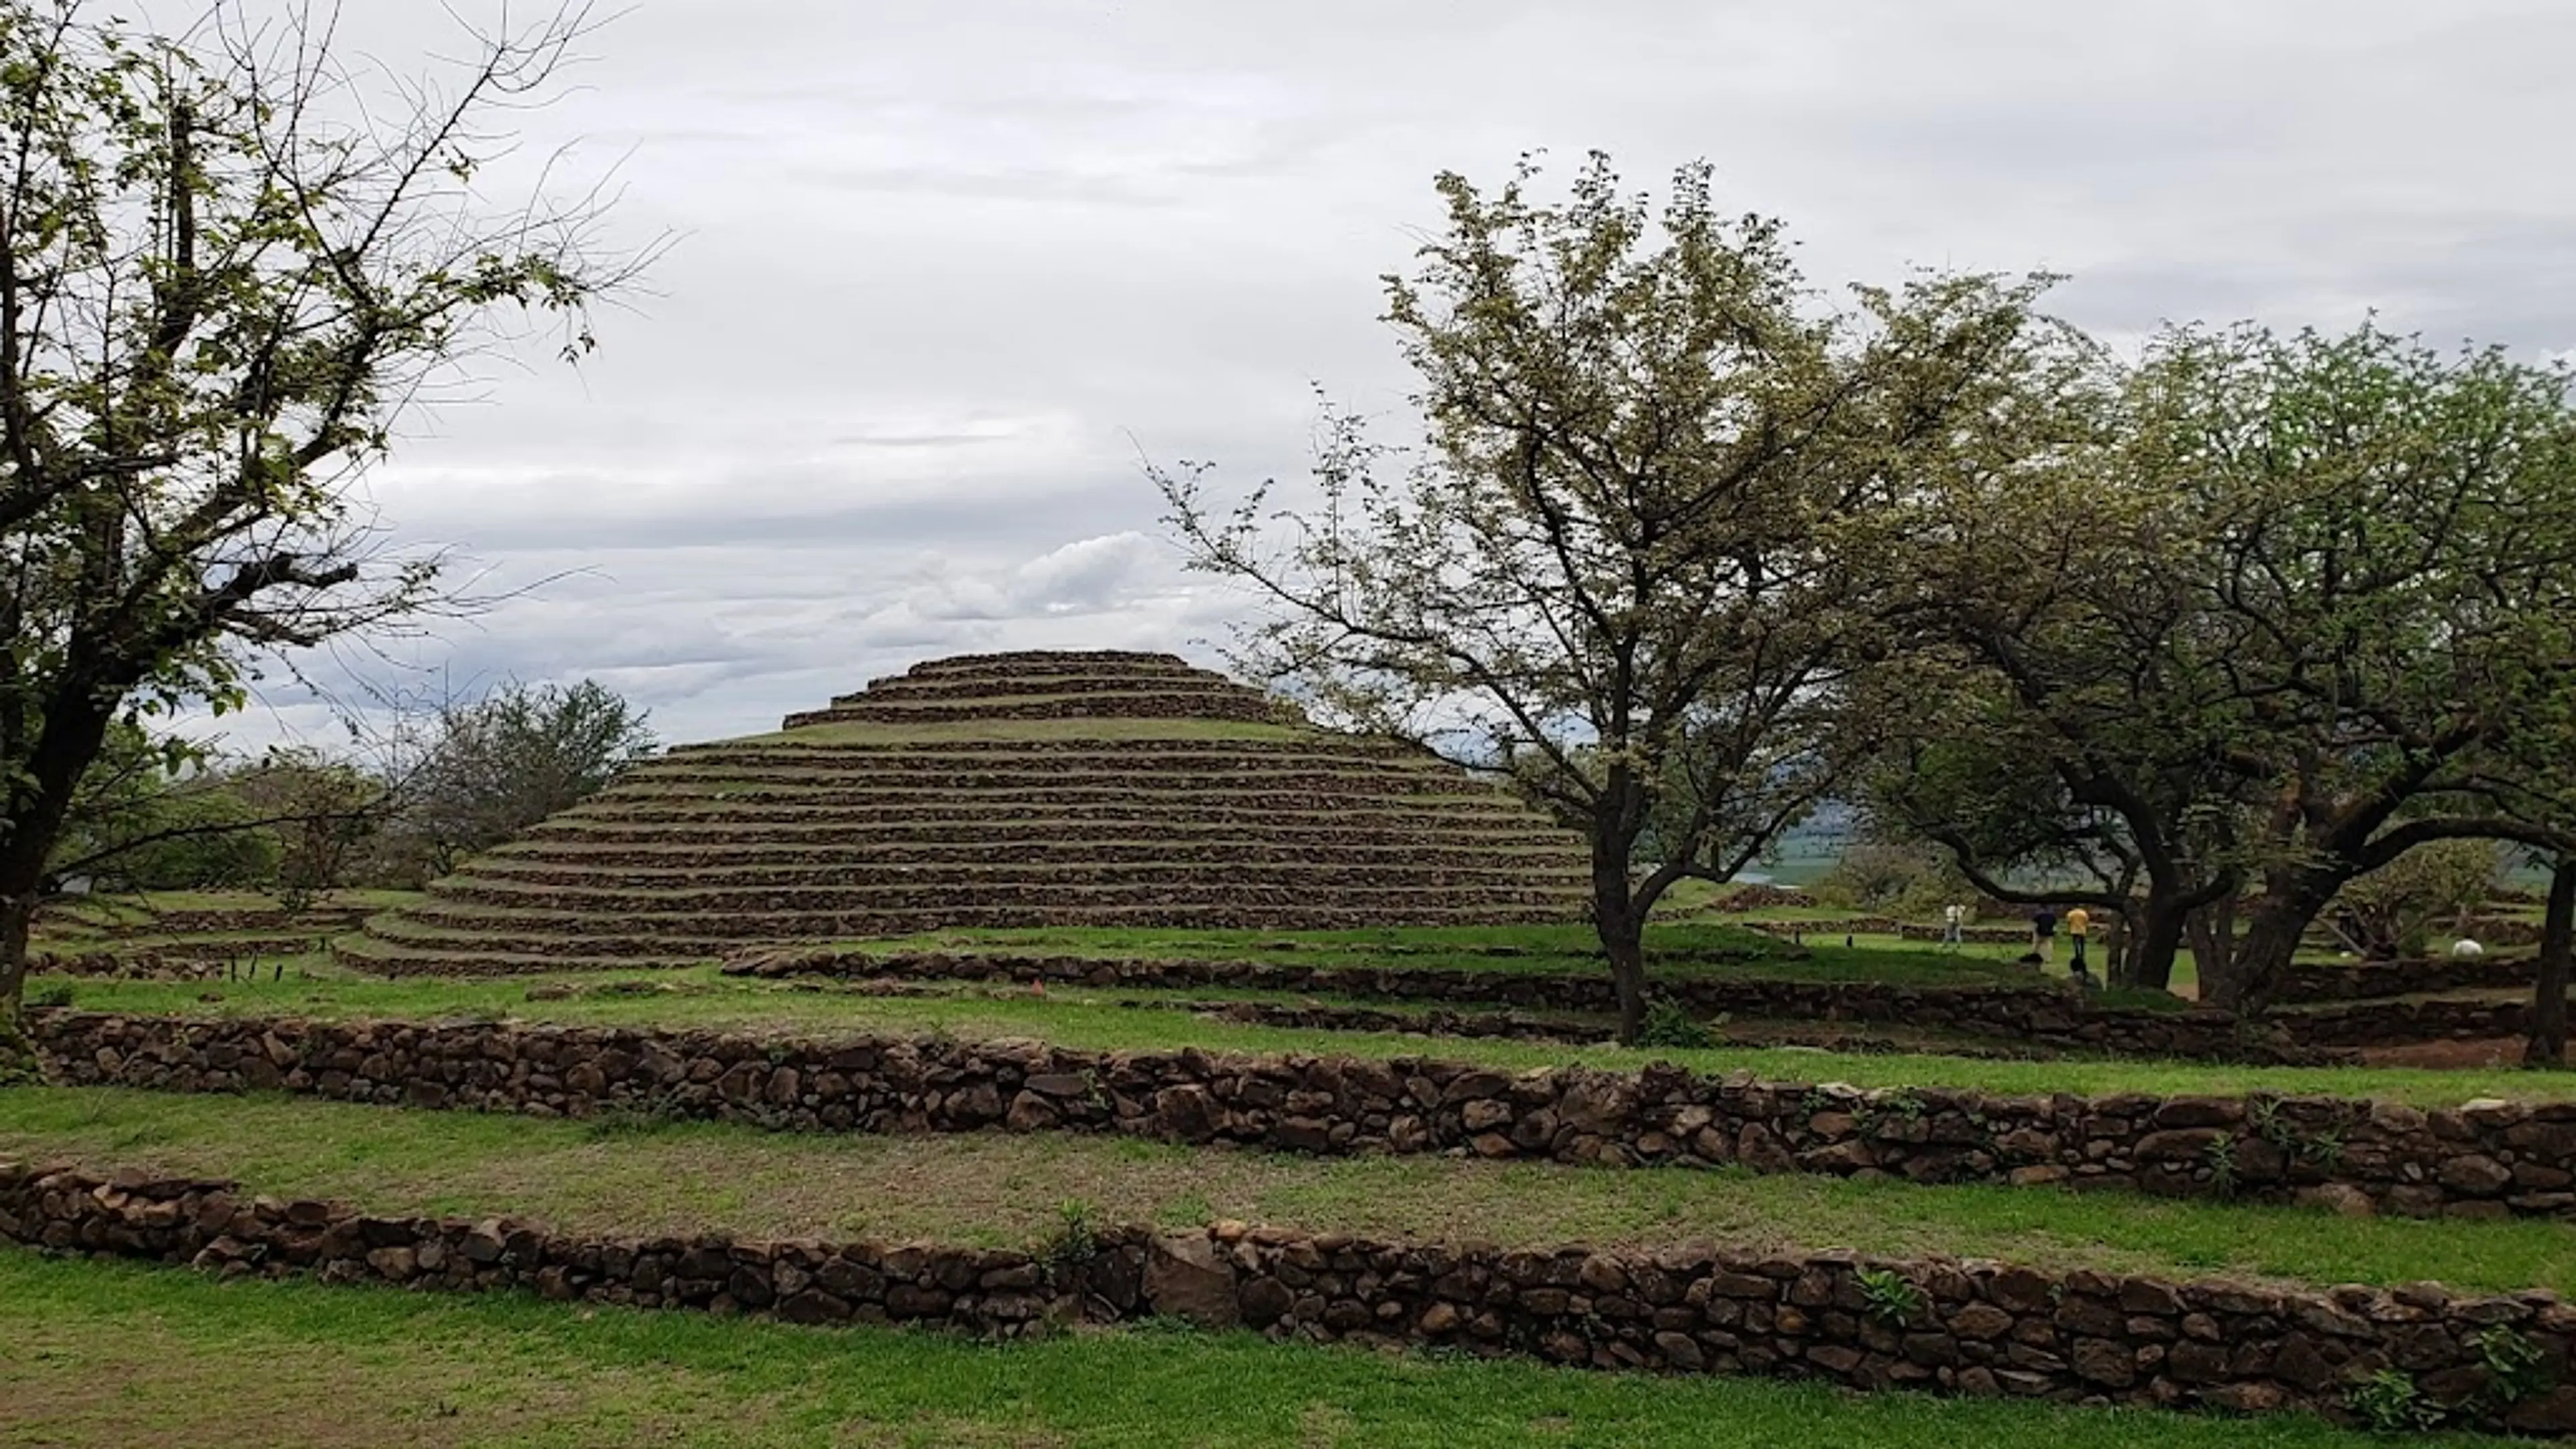 Guachimontones Pyramids